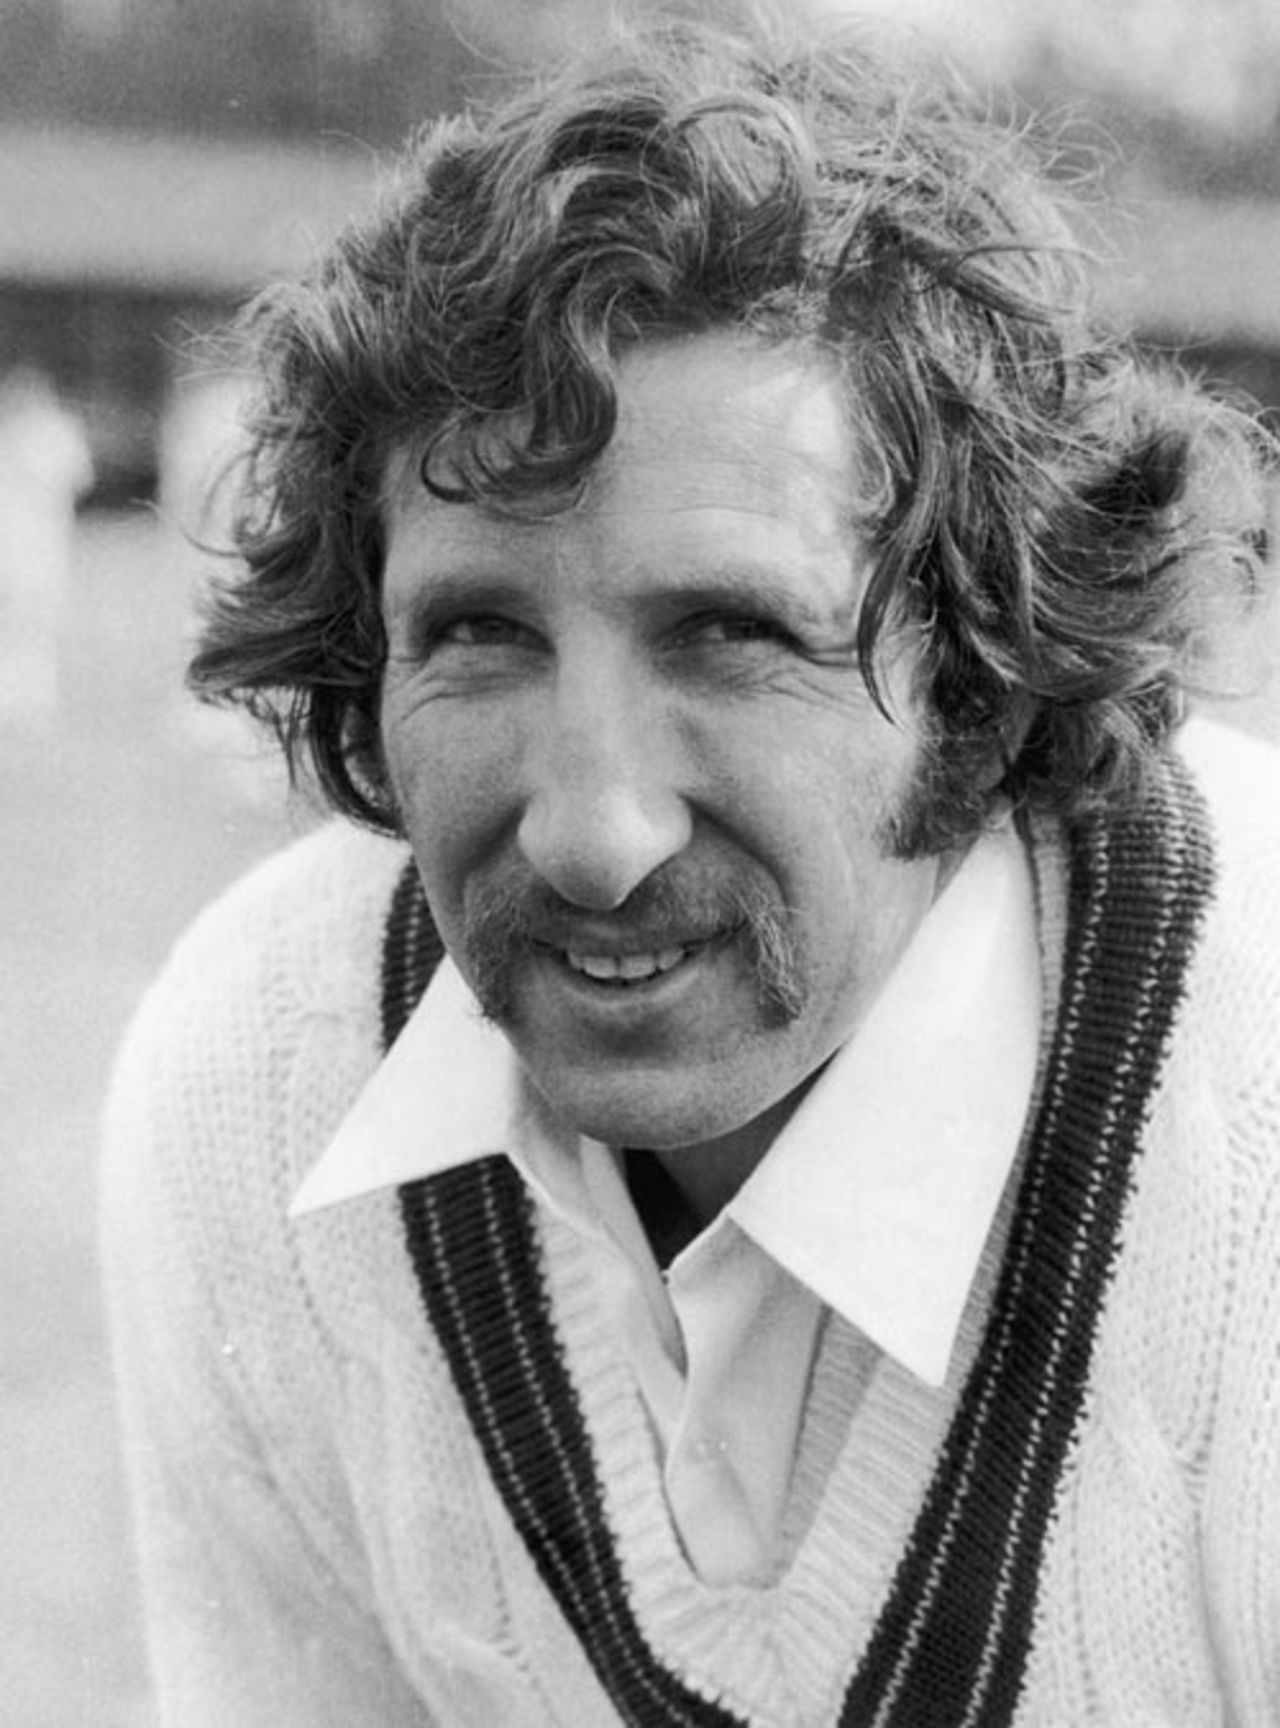 Australian fast bowler Max Walker, January 1, 1977